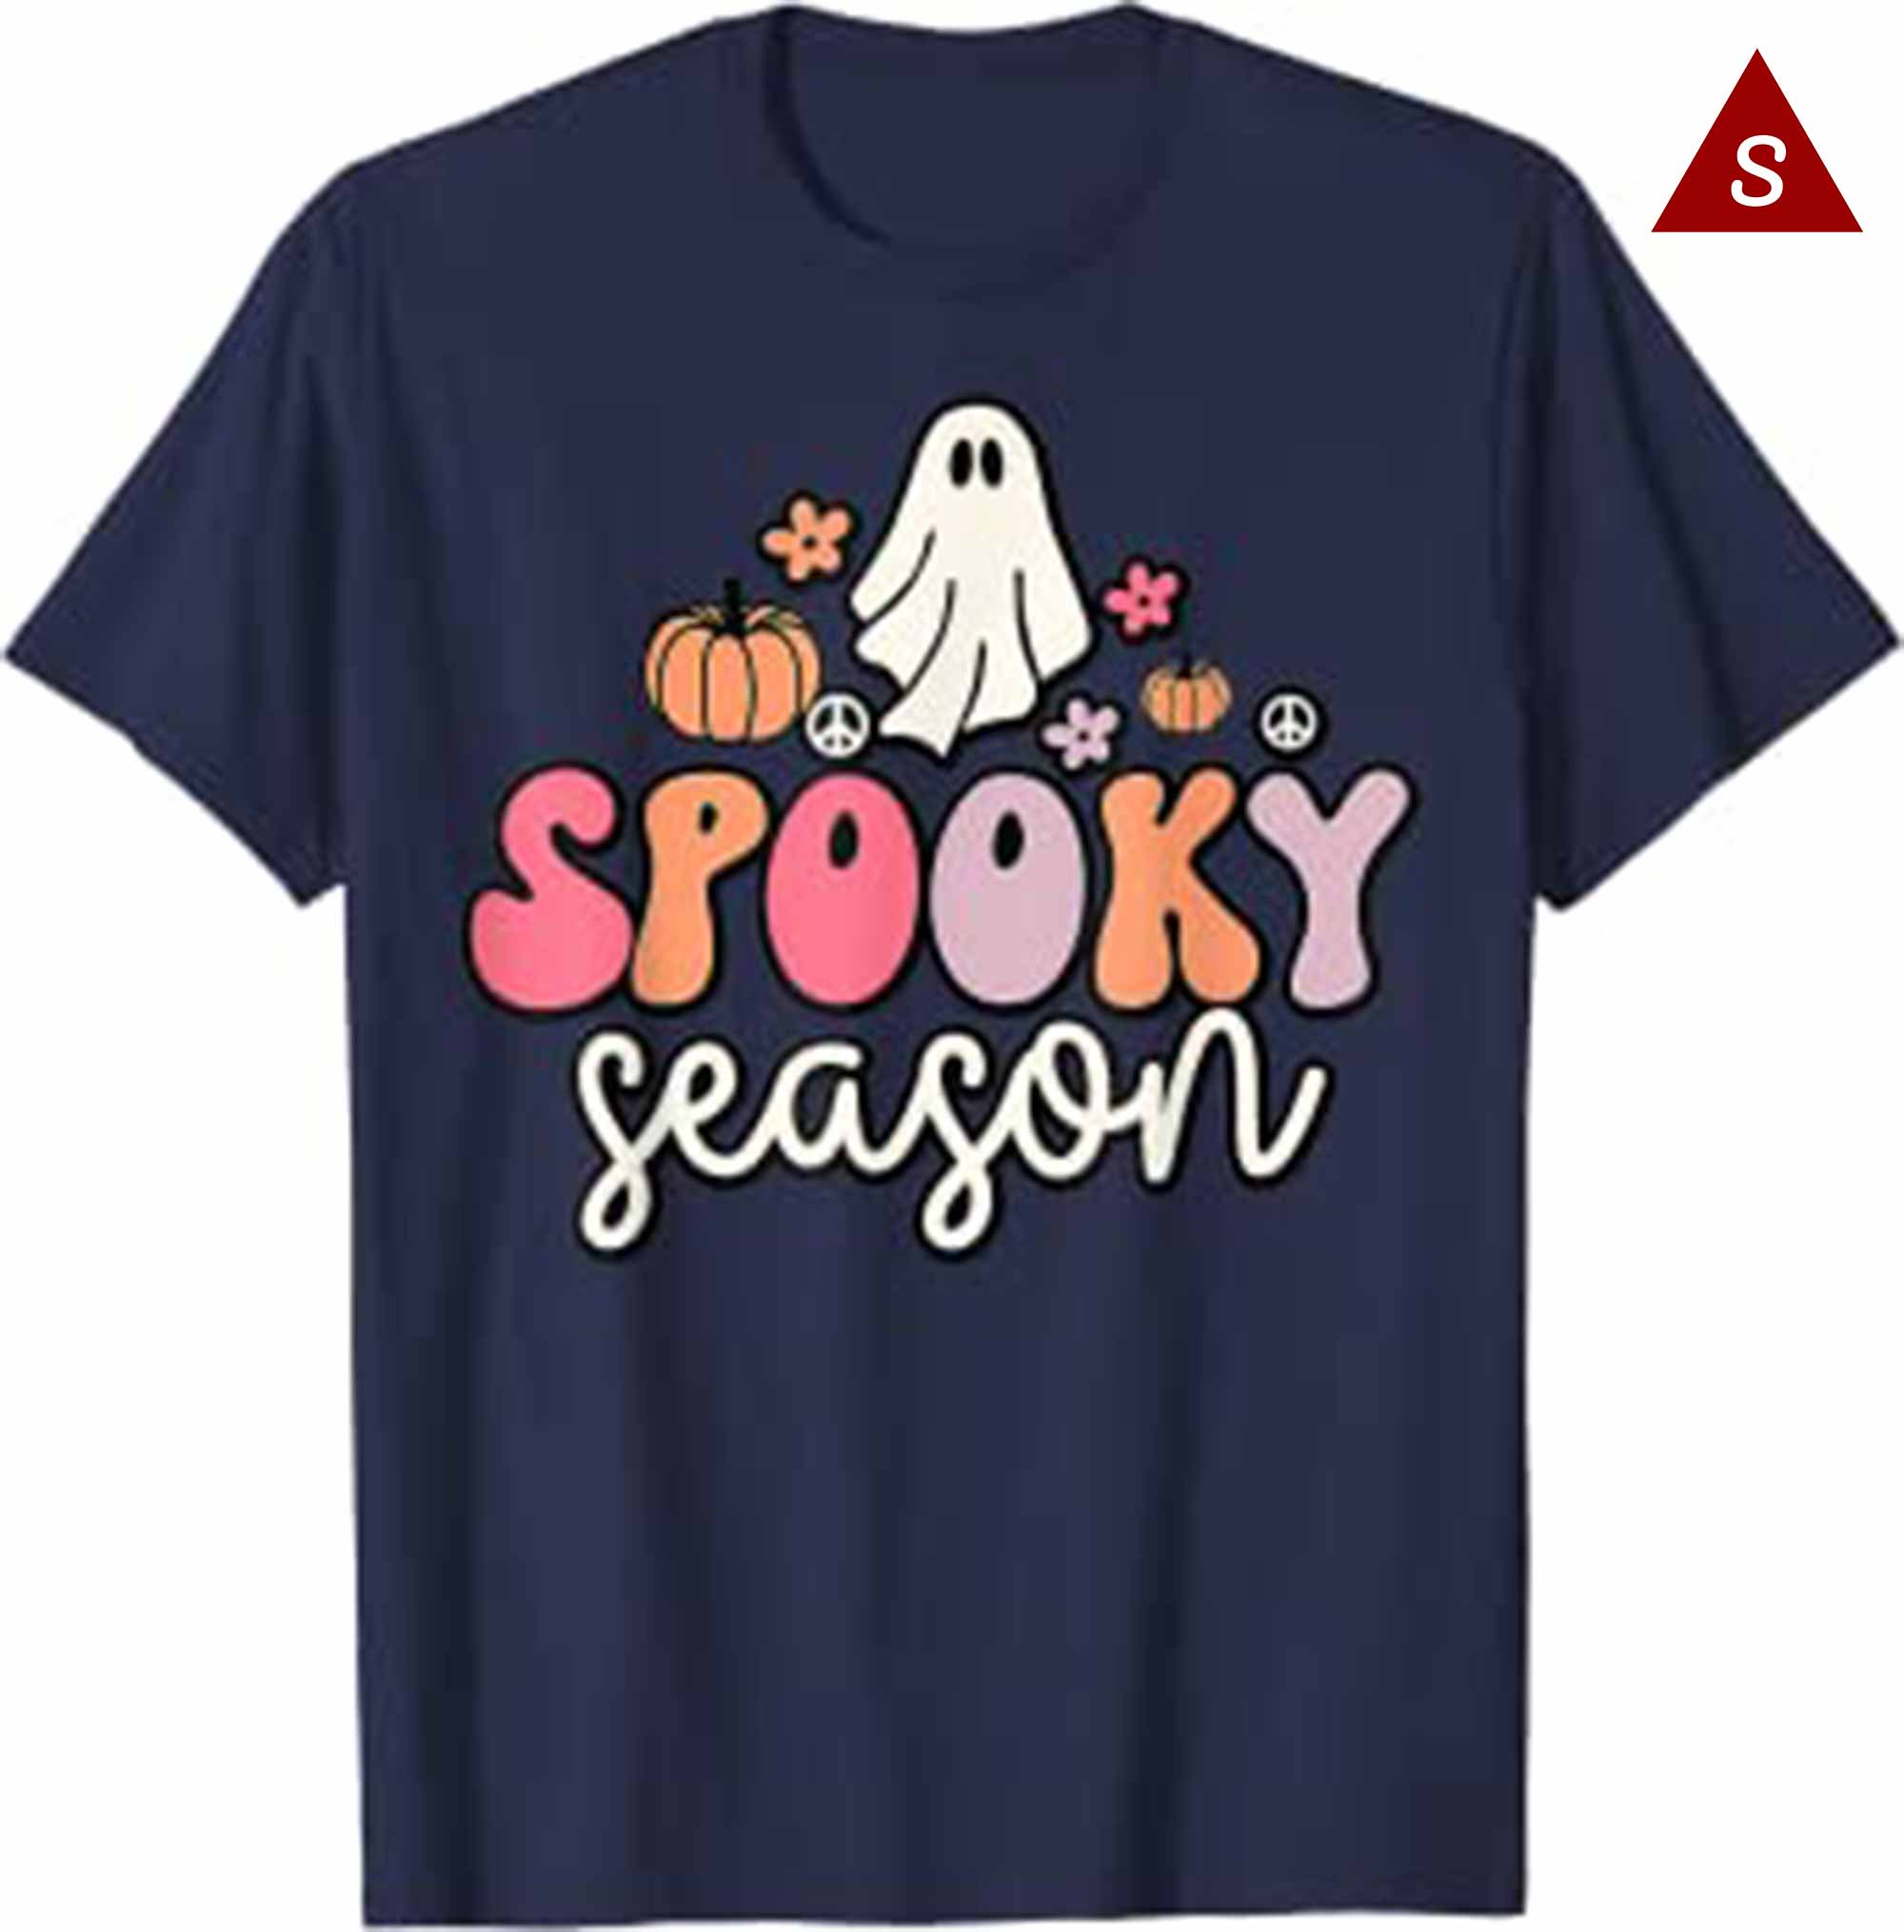 Skitongift Groovy Ghost Spooky Season T Shirt